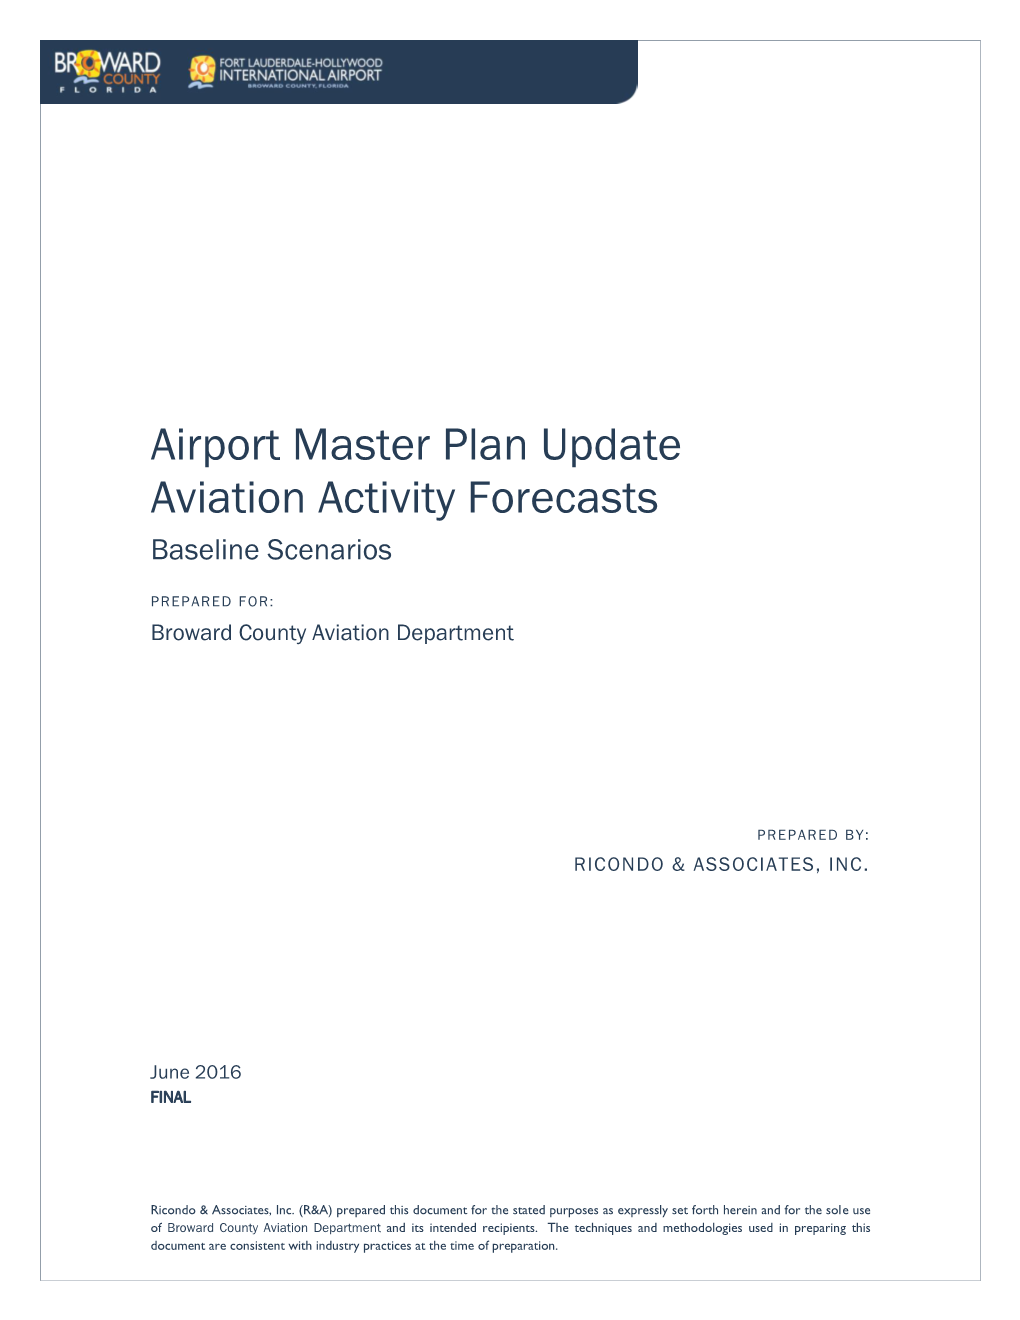 Airport Master Plan Update Aviation Activity Forecasts Baseline Scenarios